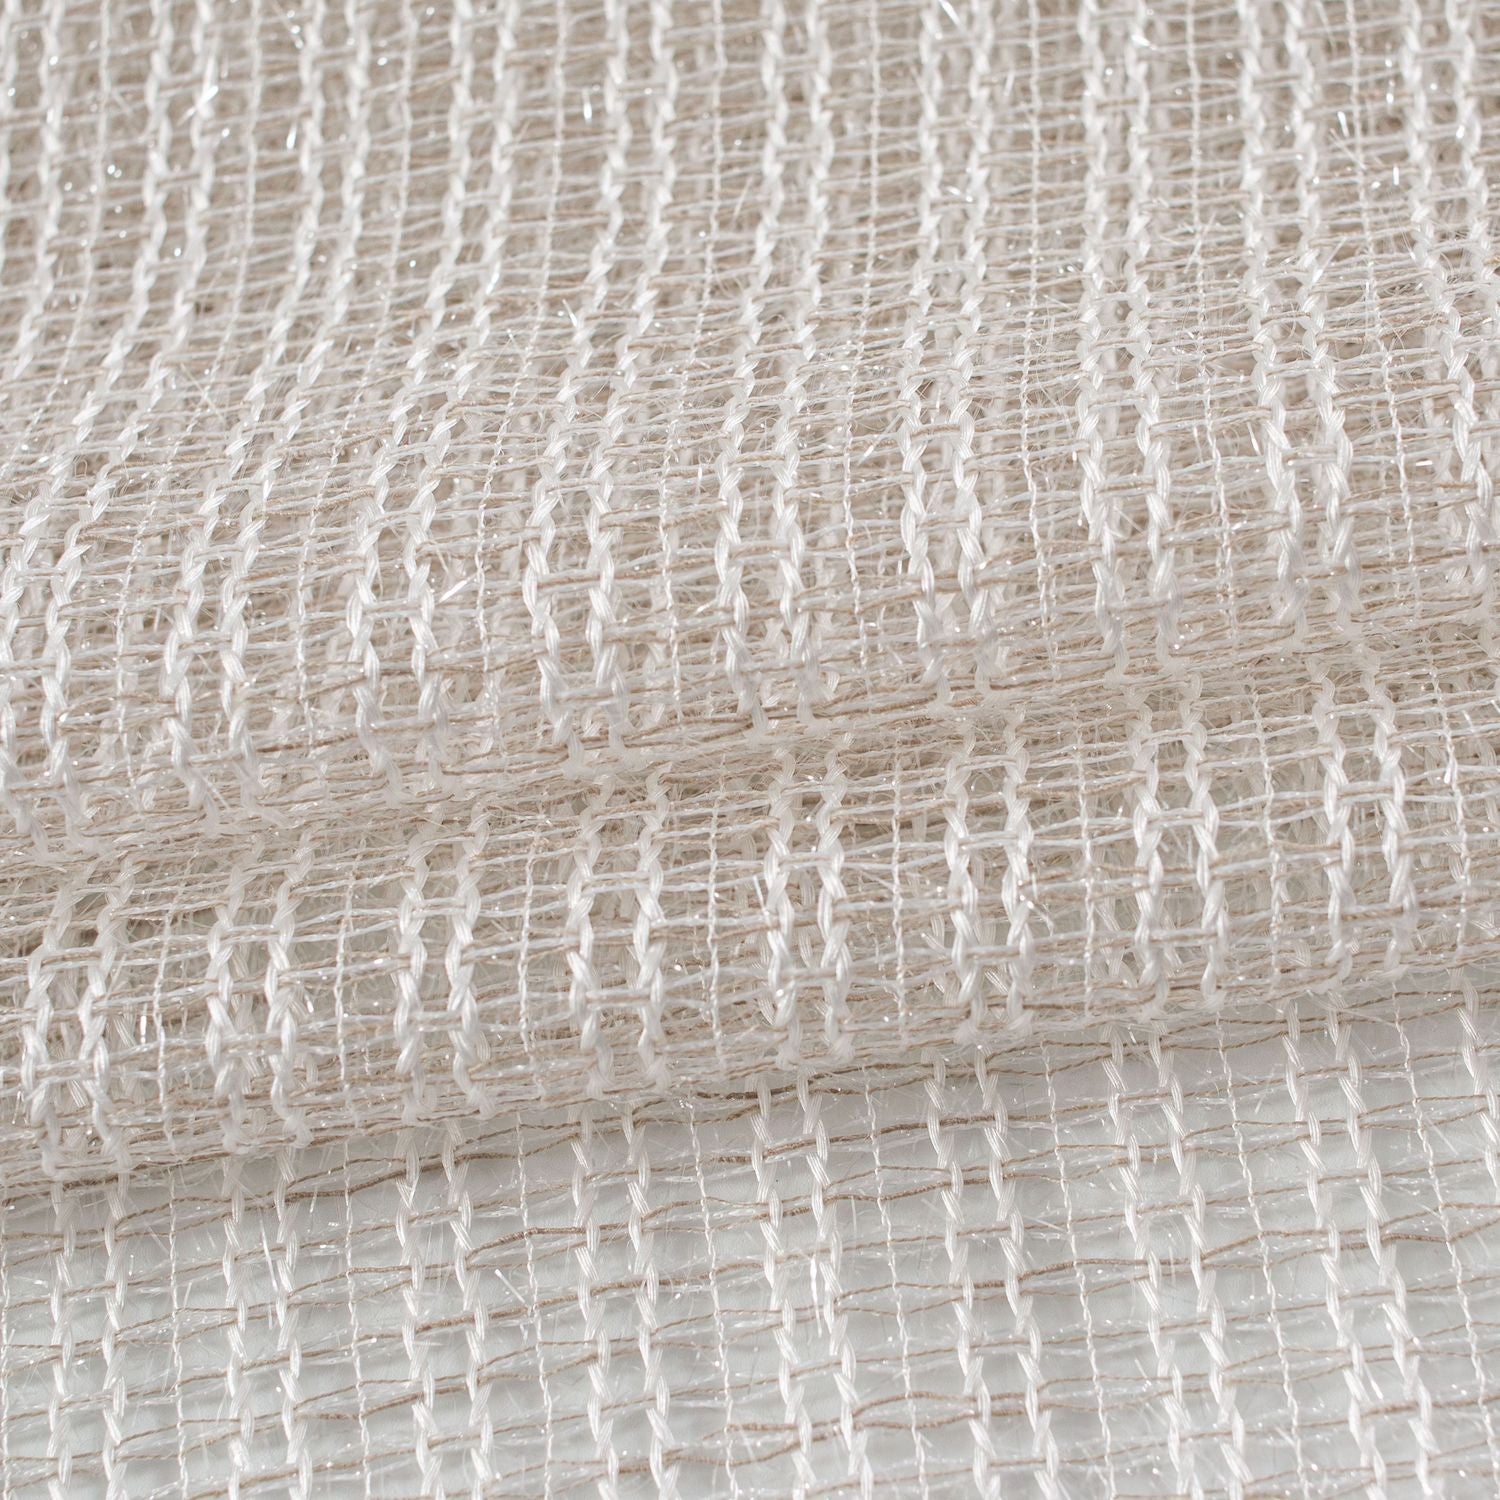 Dainty Home Krystal 3D Mesh Textured Threaded Lurex Designed Sheer Grommet Panel Pair